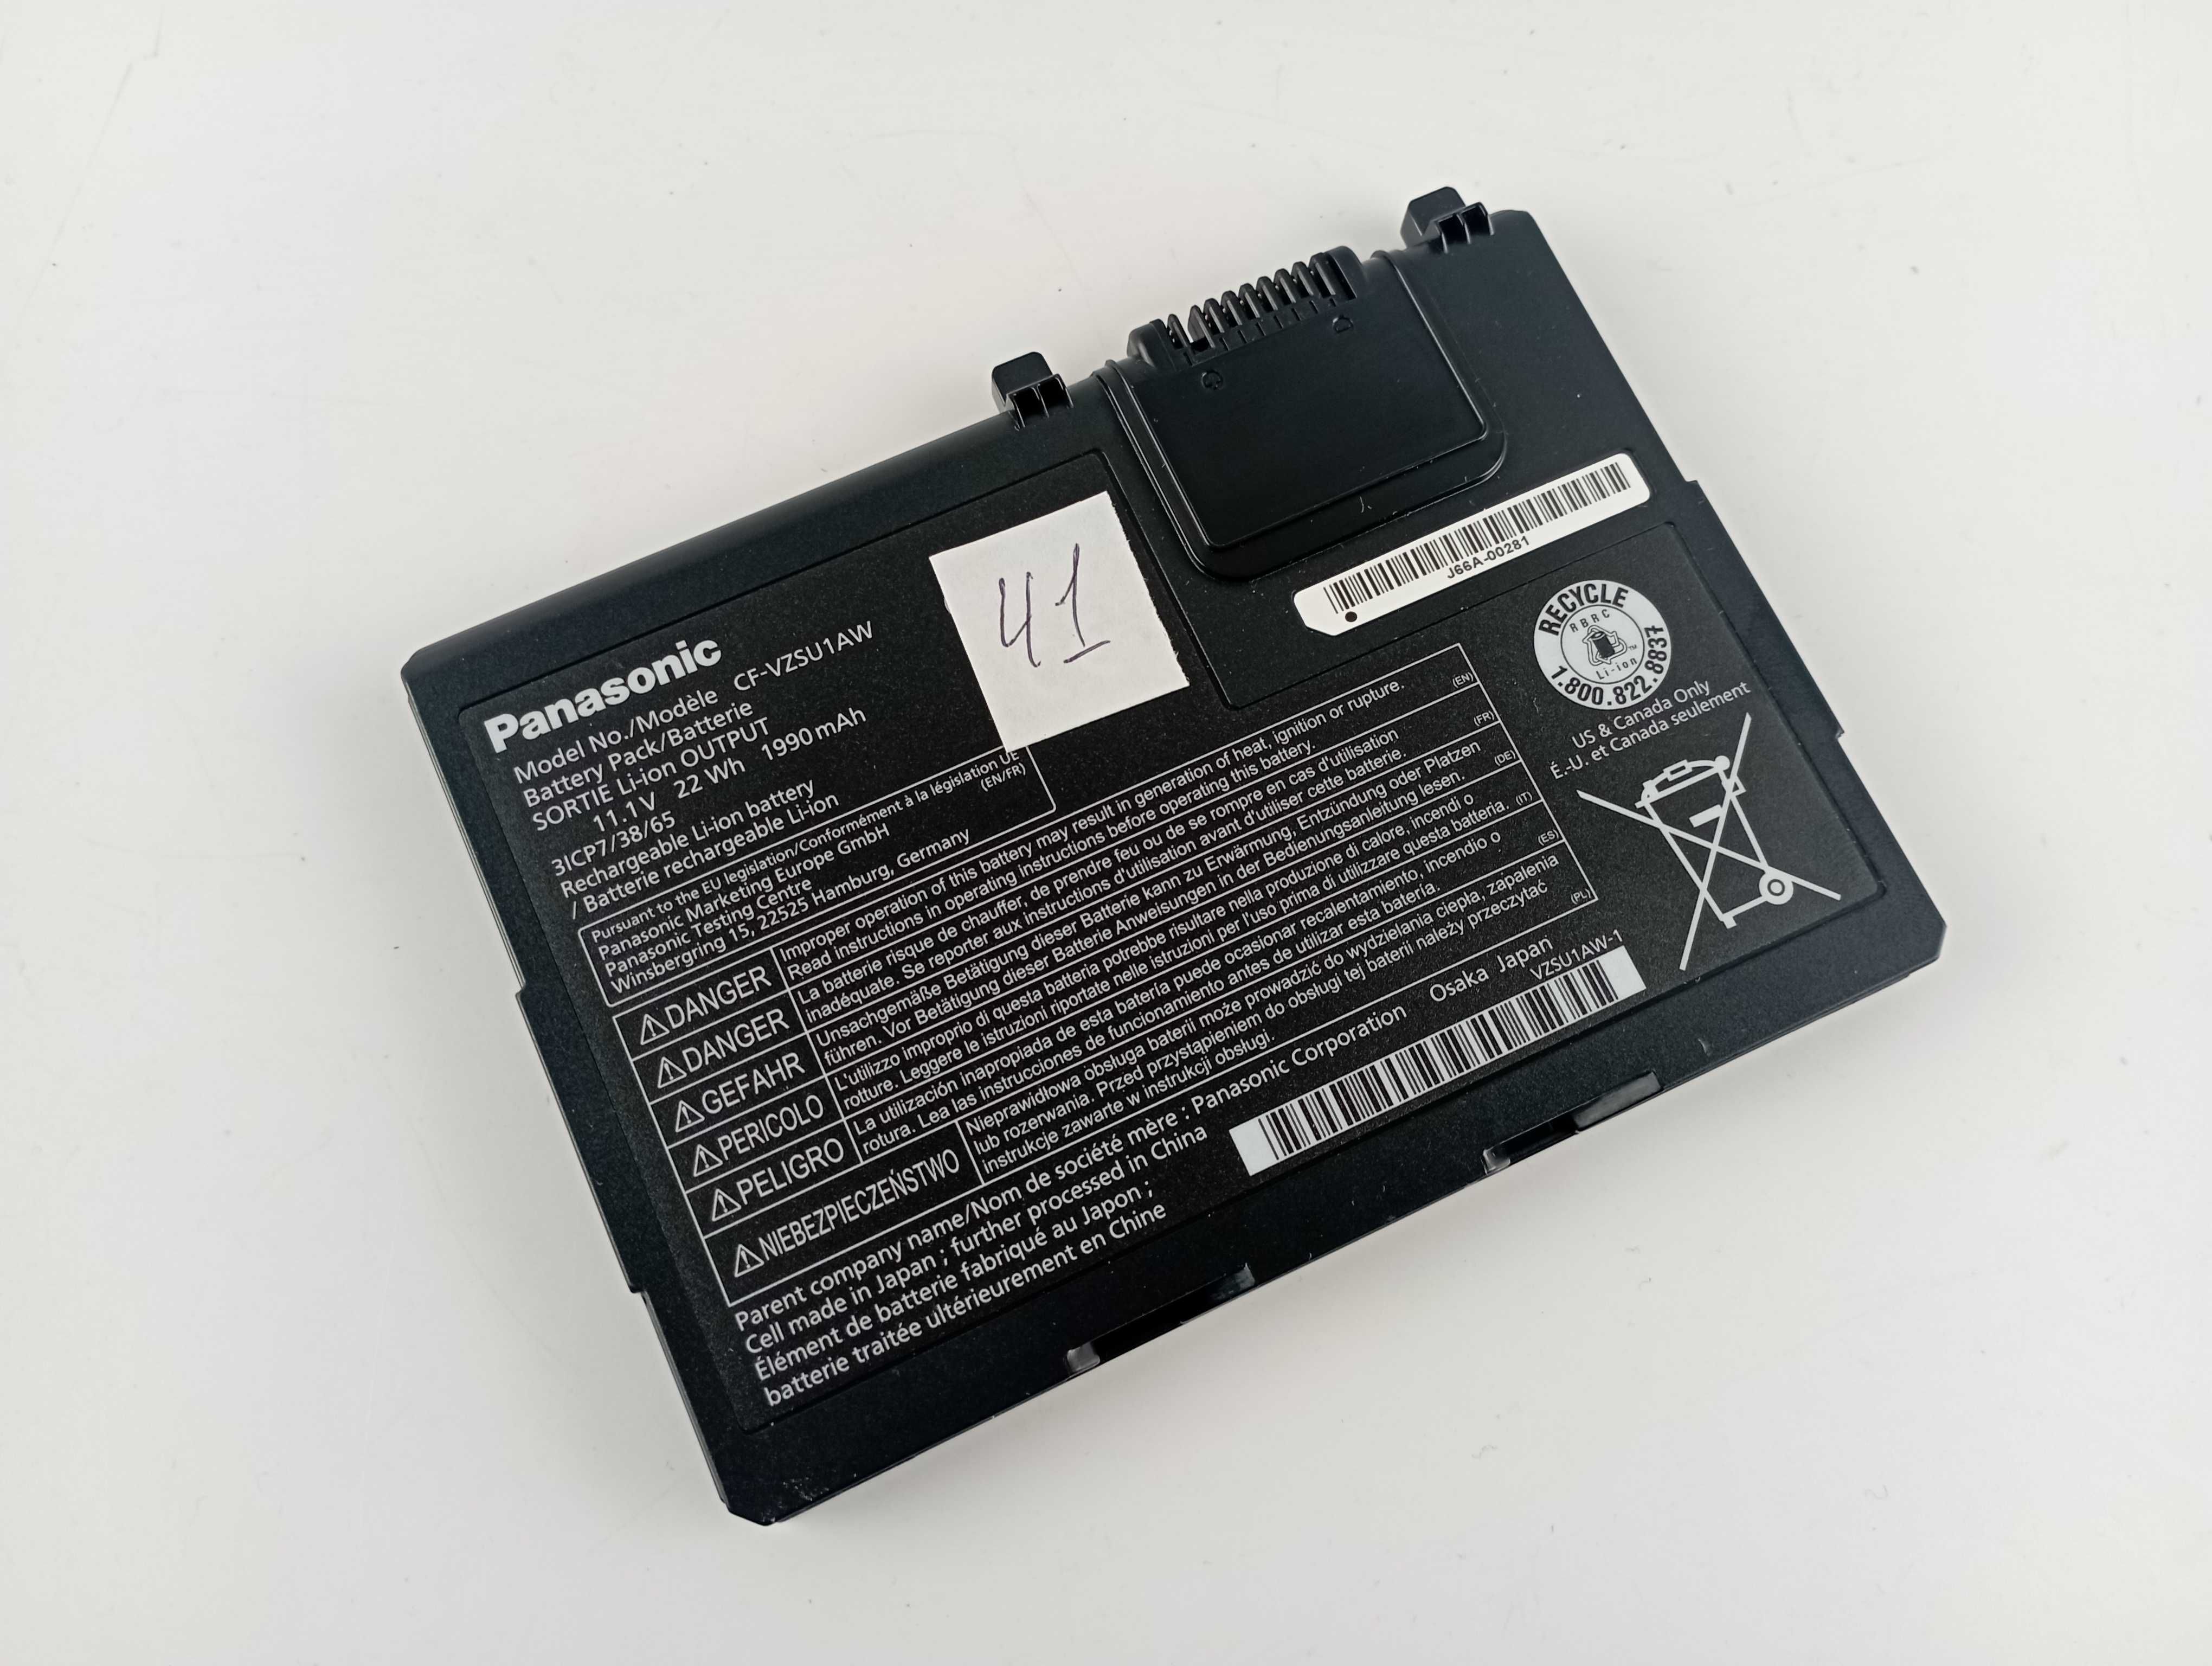 Батарея акумулятор для ноутбуку Panasonic CF-33 CF-VZSU1AW вживана